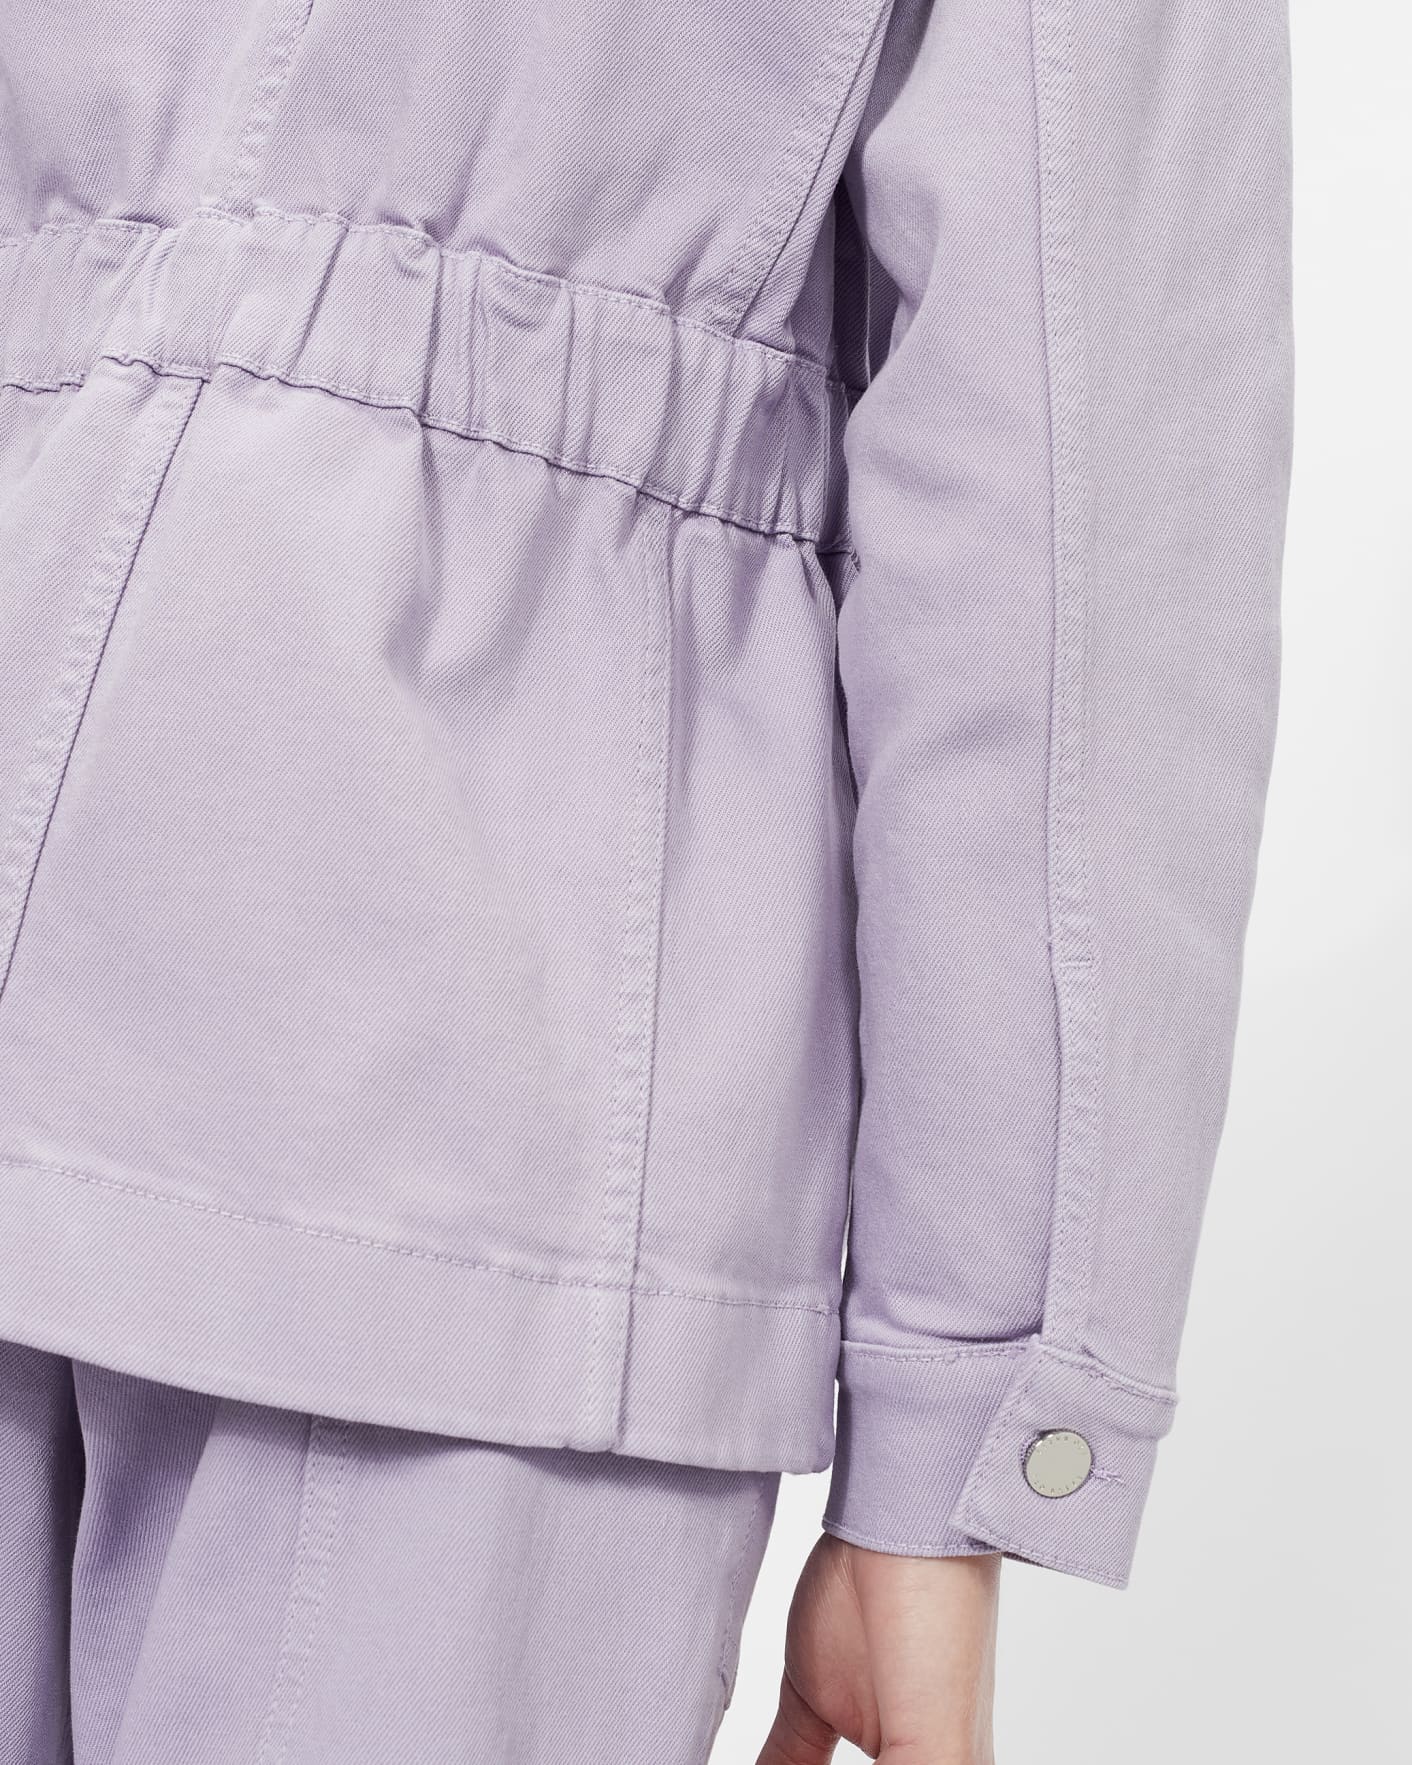 Lilac Oversized Denim Jacket With Elastic Waist Ted Baker